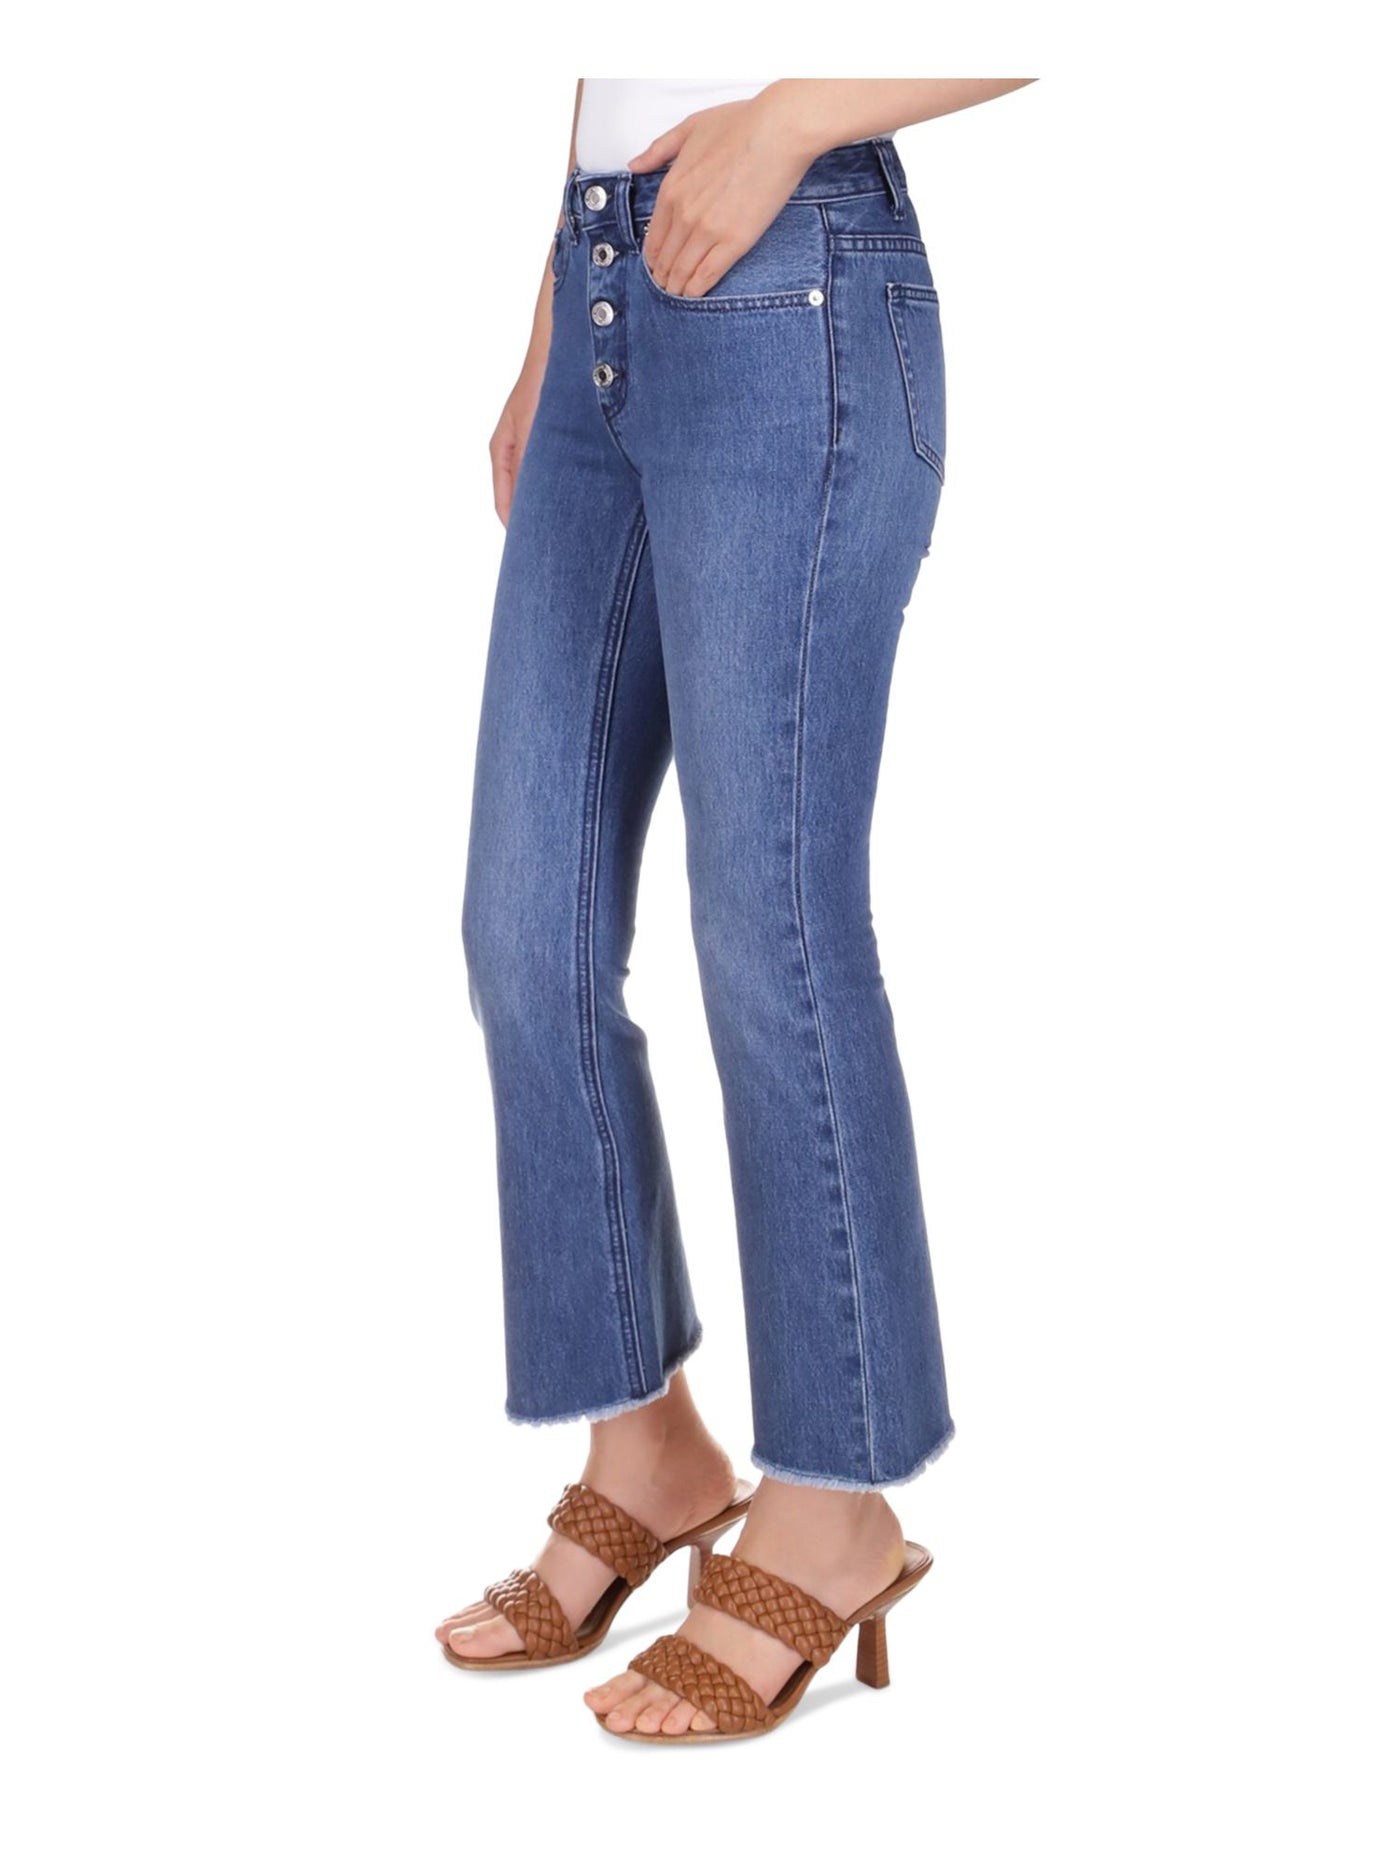 MICHAEL KORS Womens Blue Zippered Pocketed Button Fly Raw Hem Straight leg Jeans Petites 6P